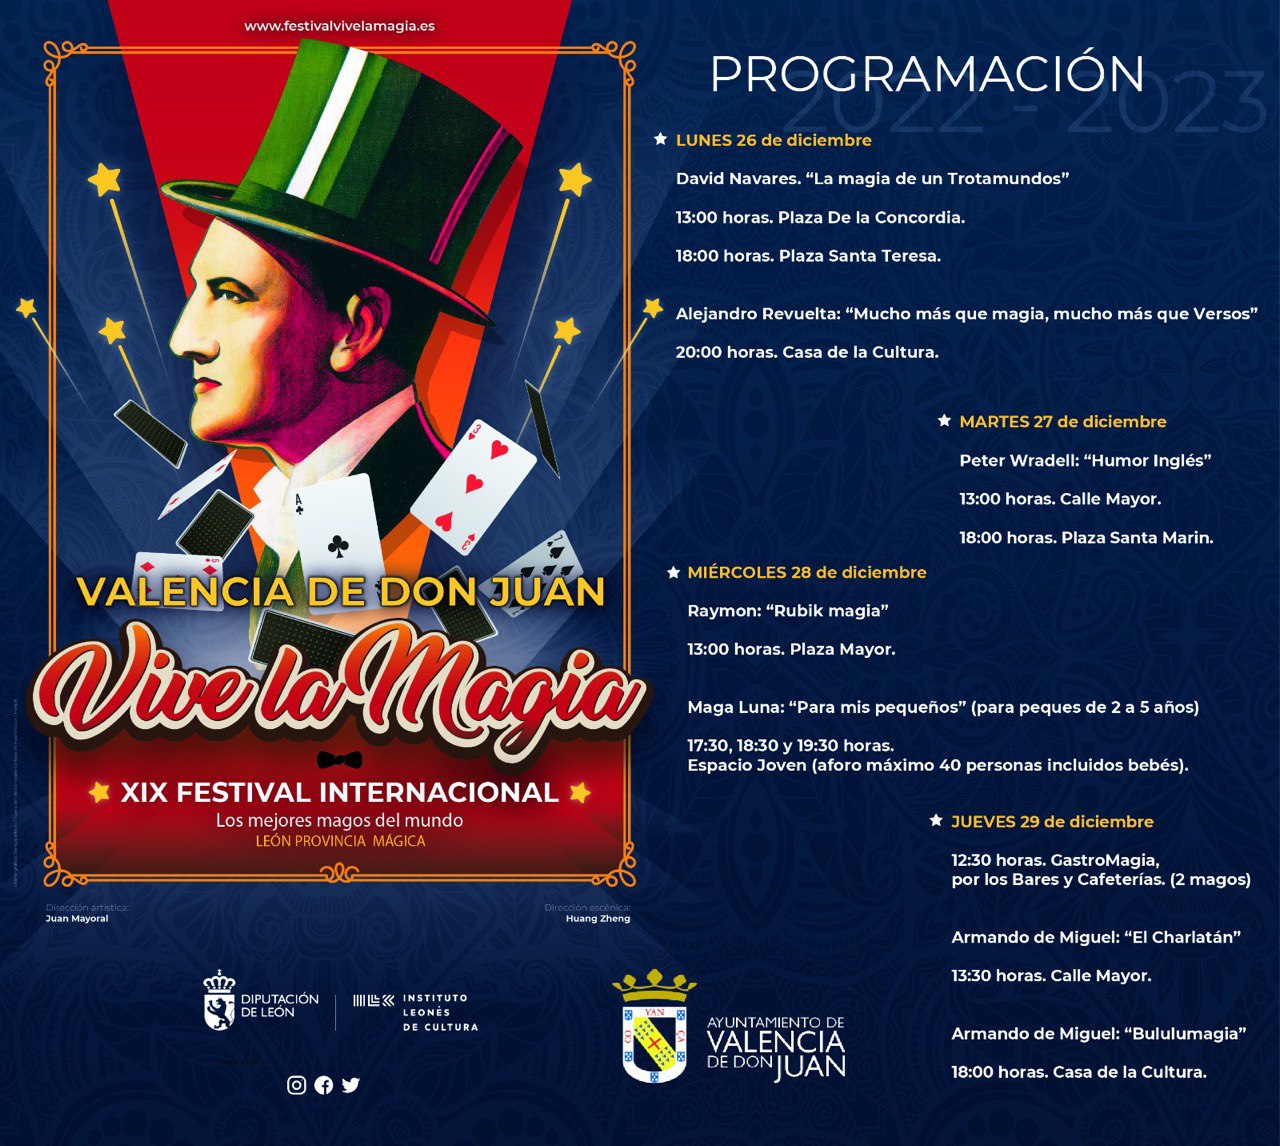 Valencia-de-Don-Juan-Festival-Internacional-Vive-la-Magia-2022-Programación